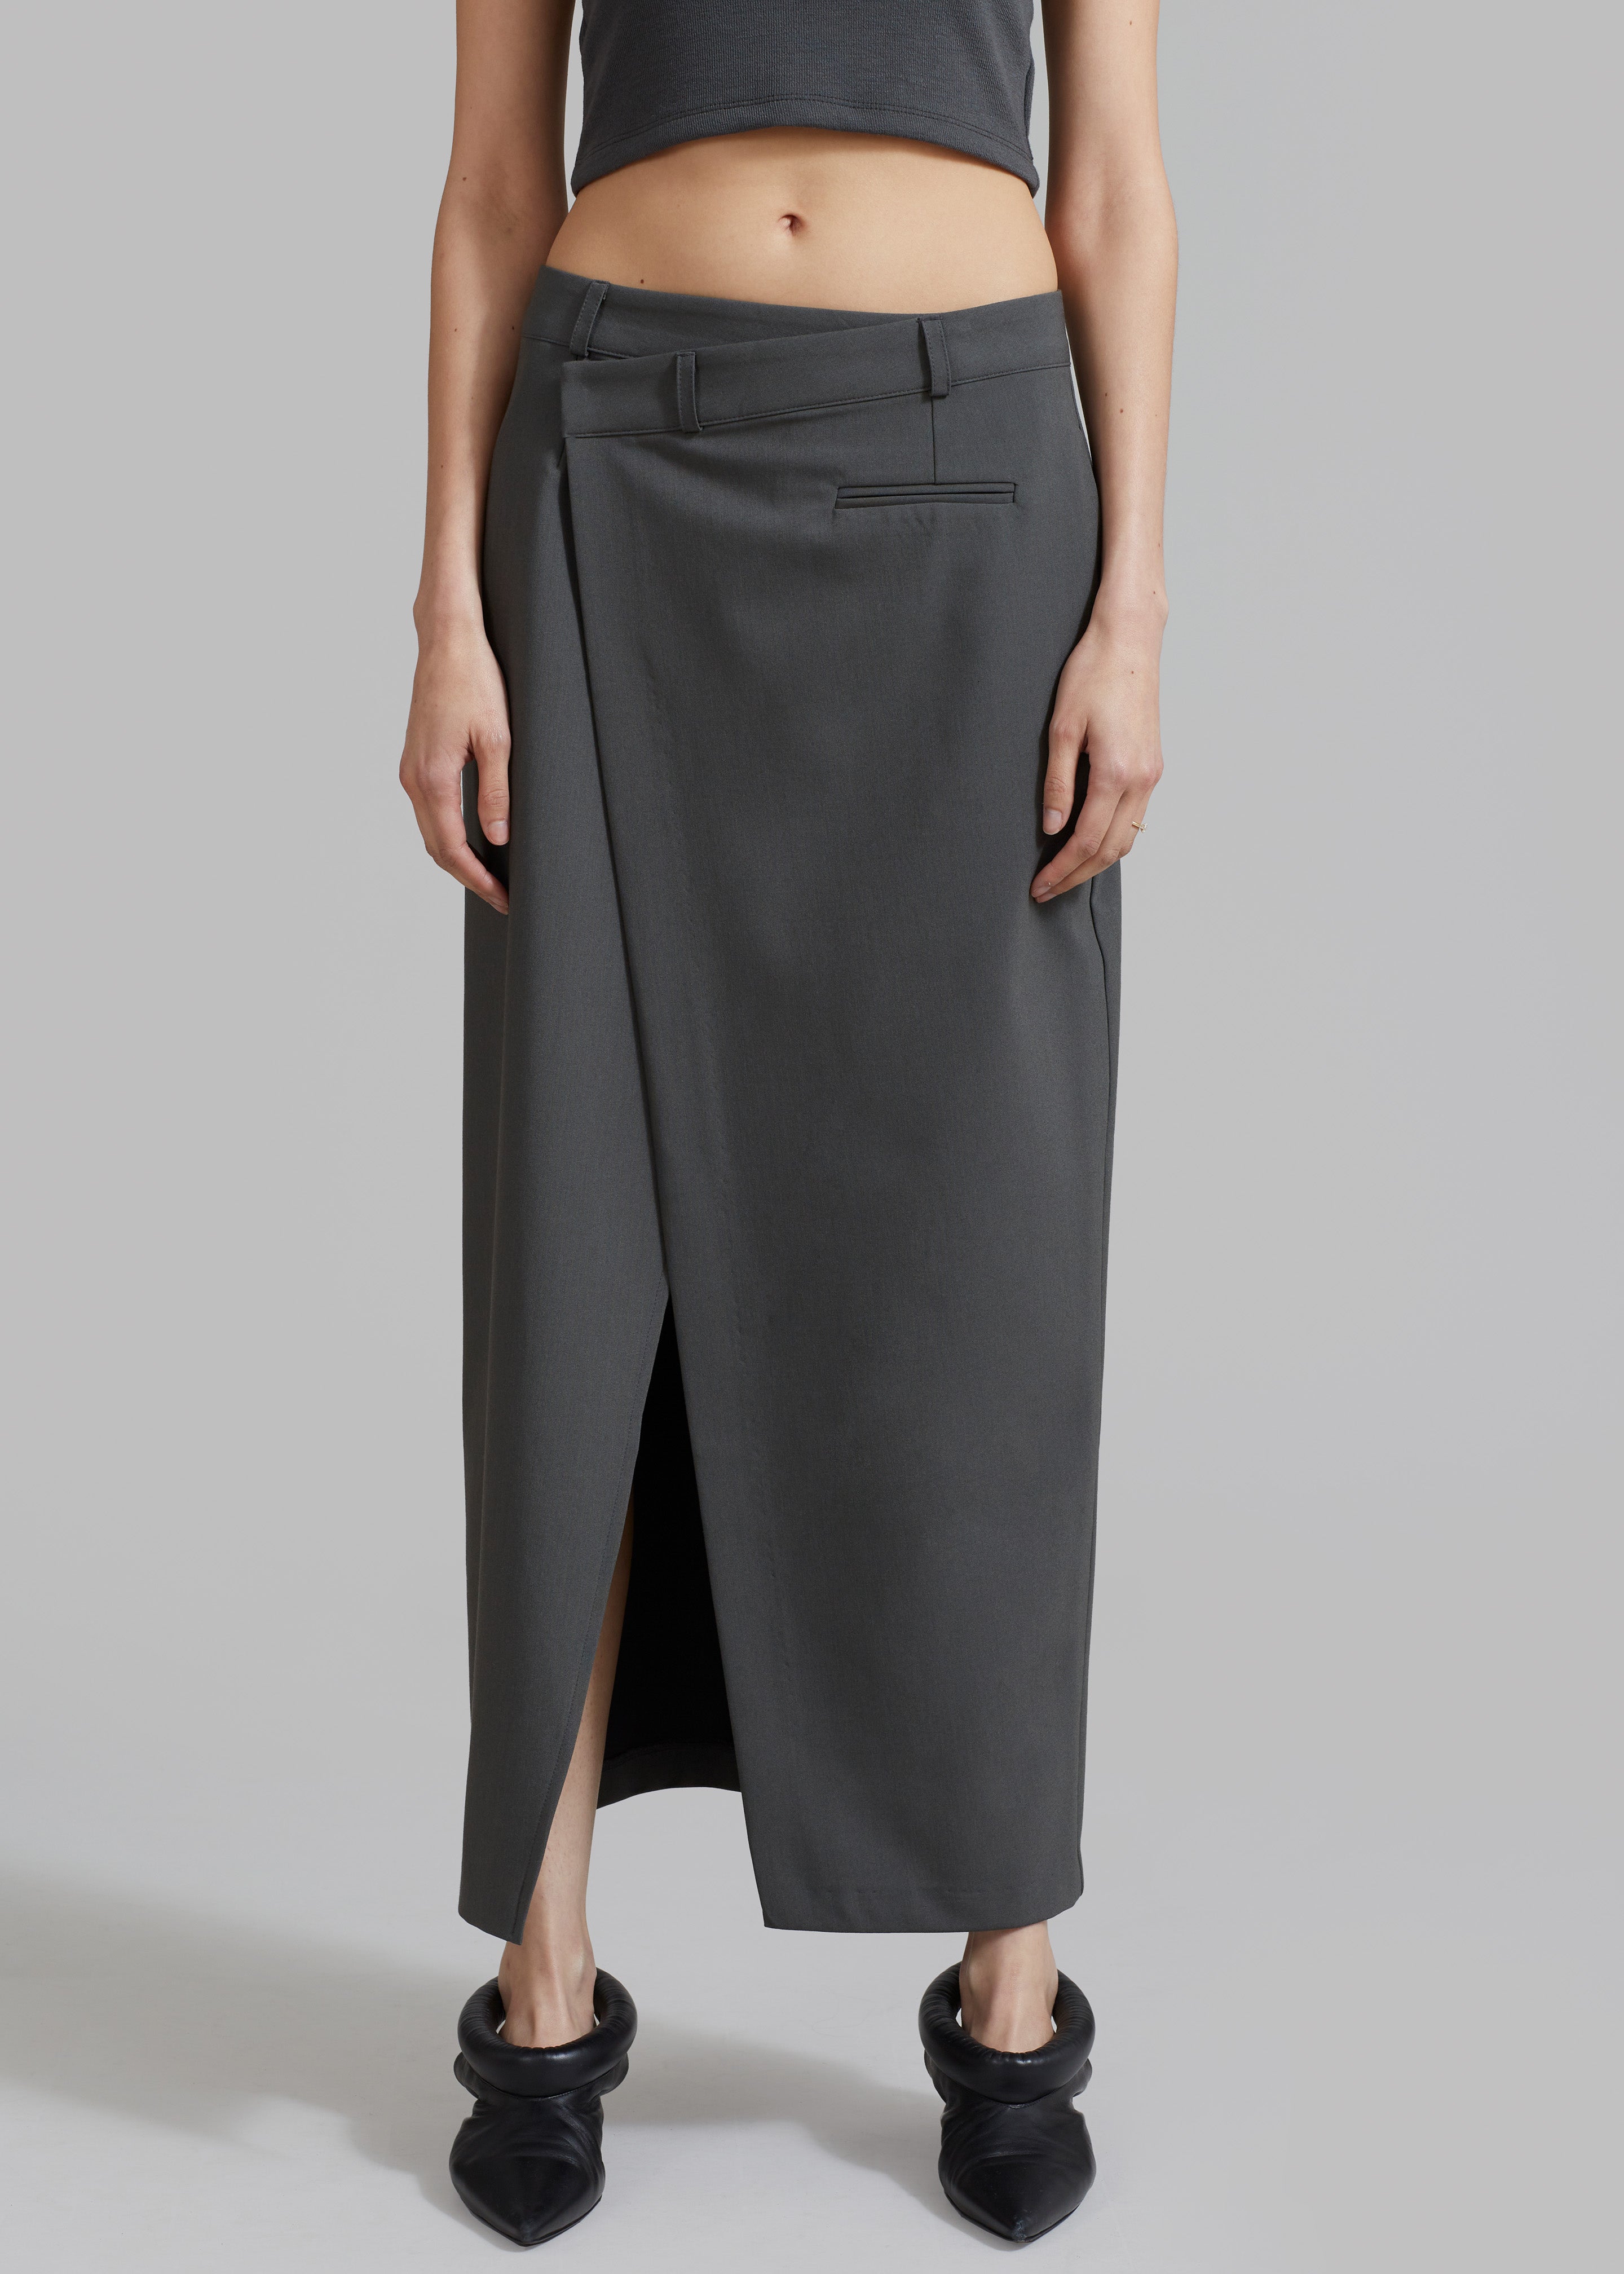 Annabel Asymmetric Midi Skirt - Grey - 1